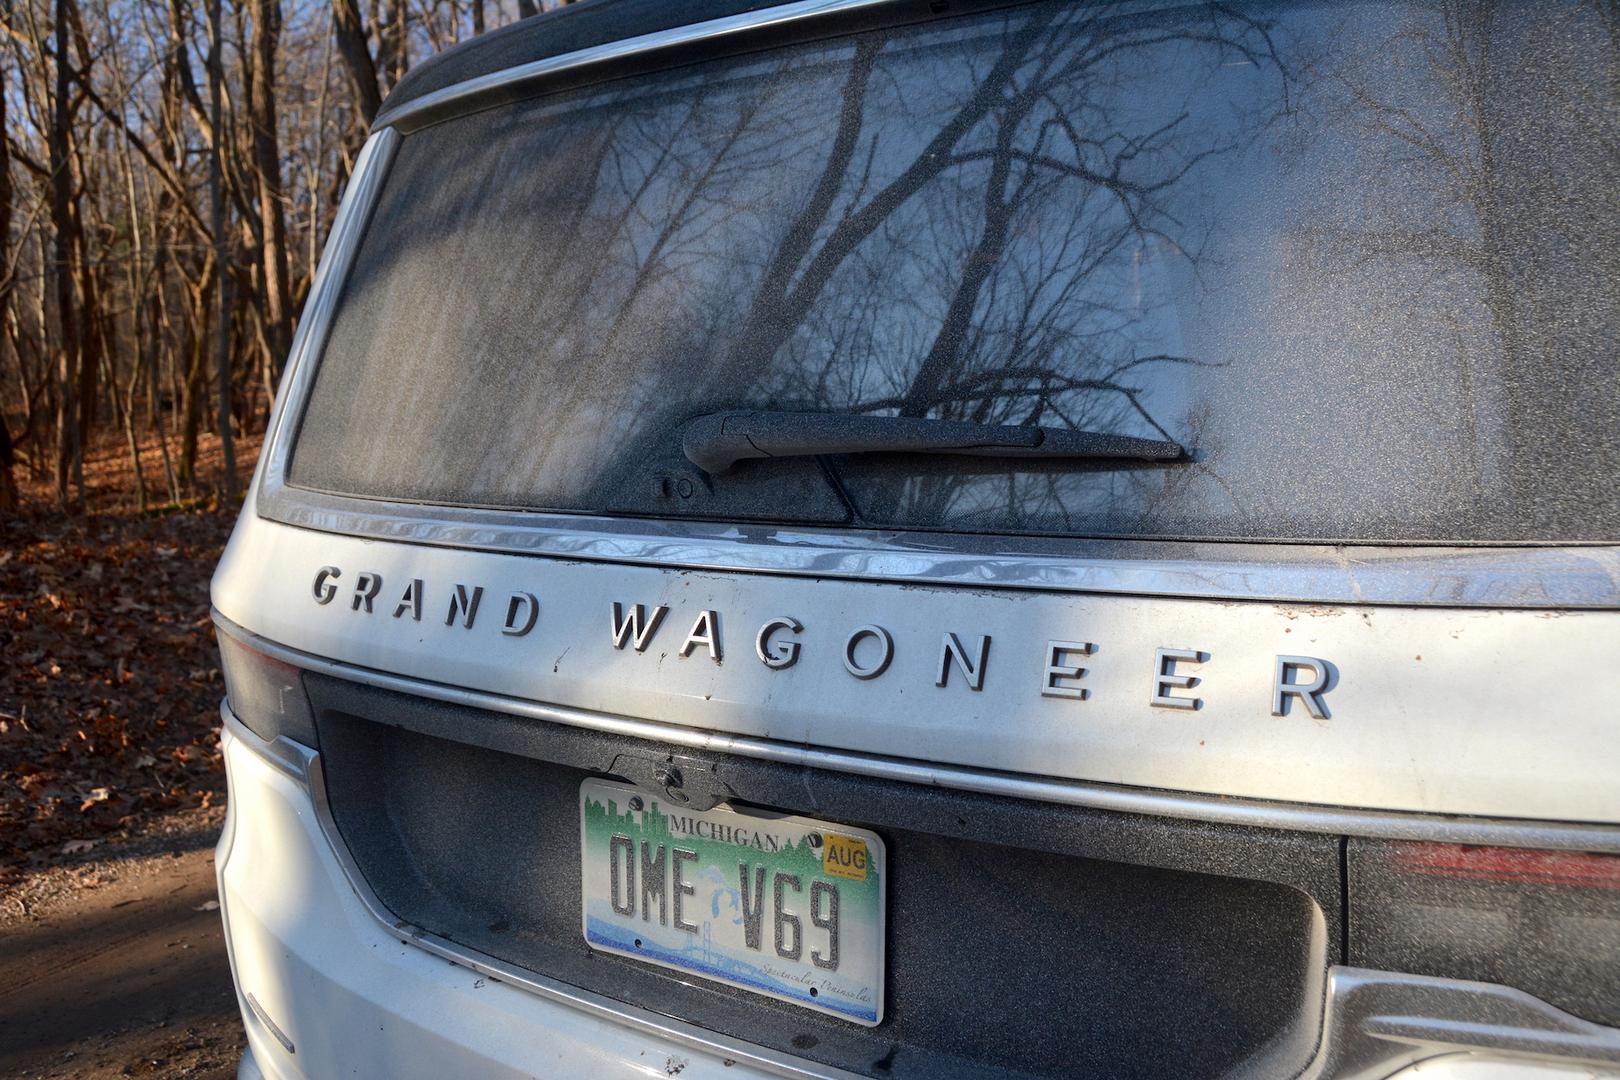 Jeep Grand Wagoneer Series III badge